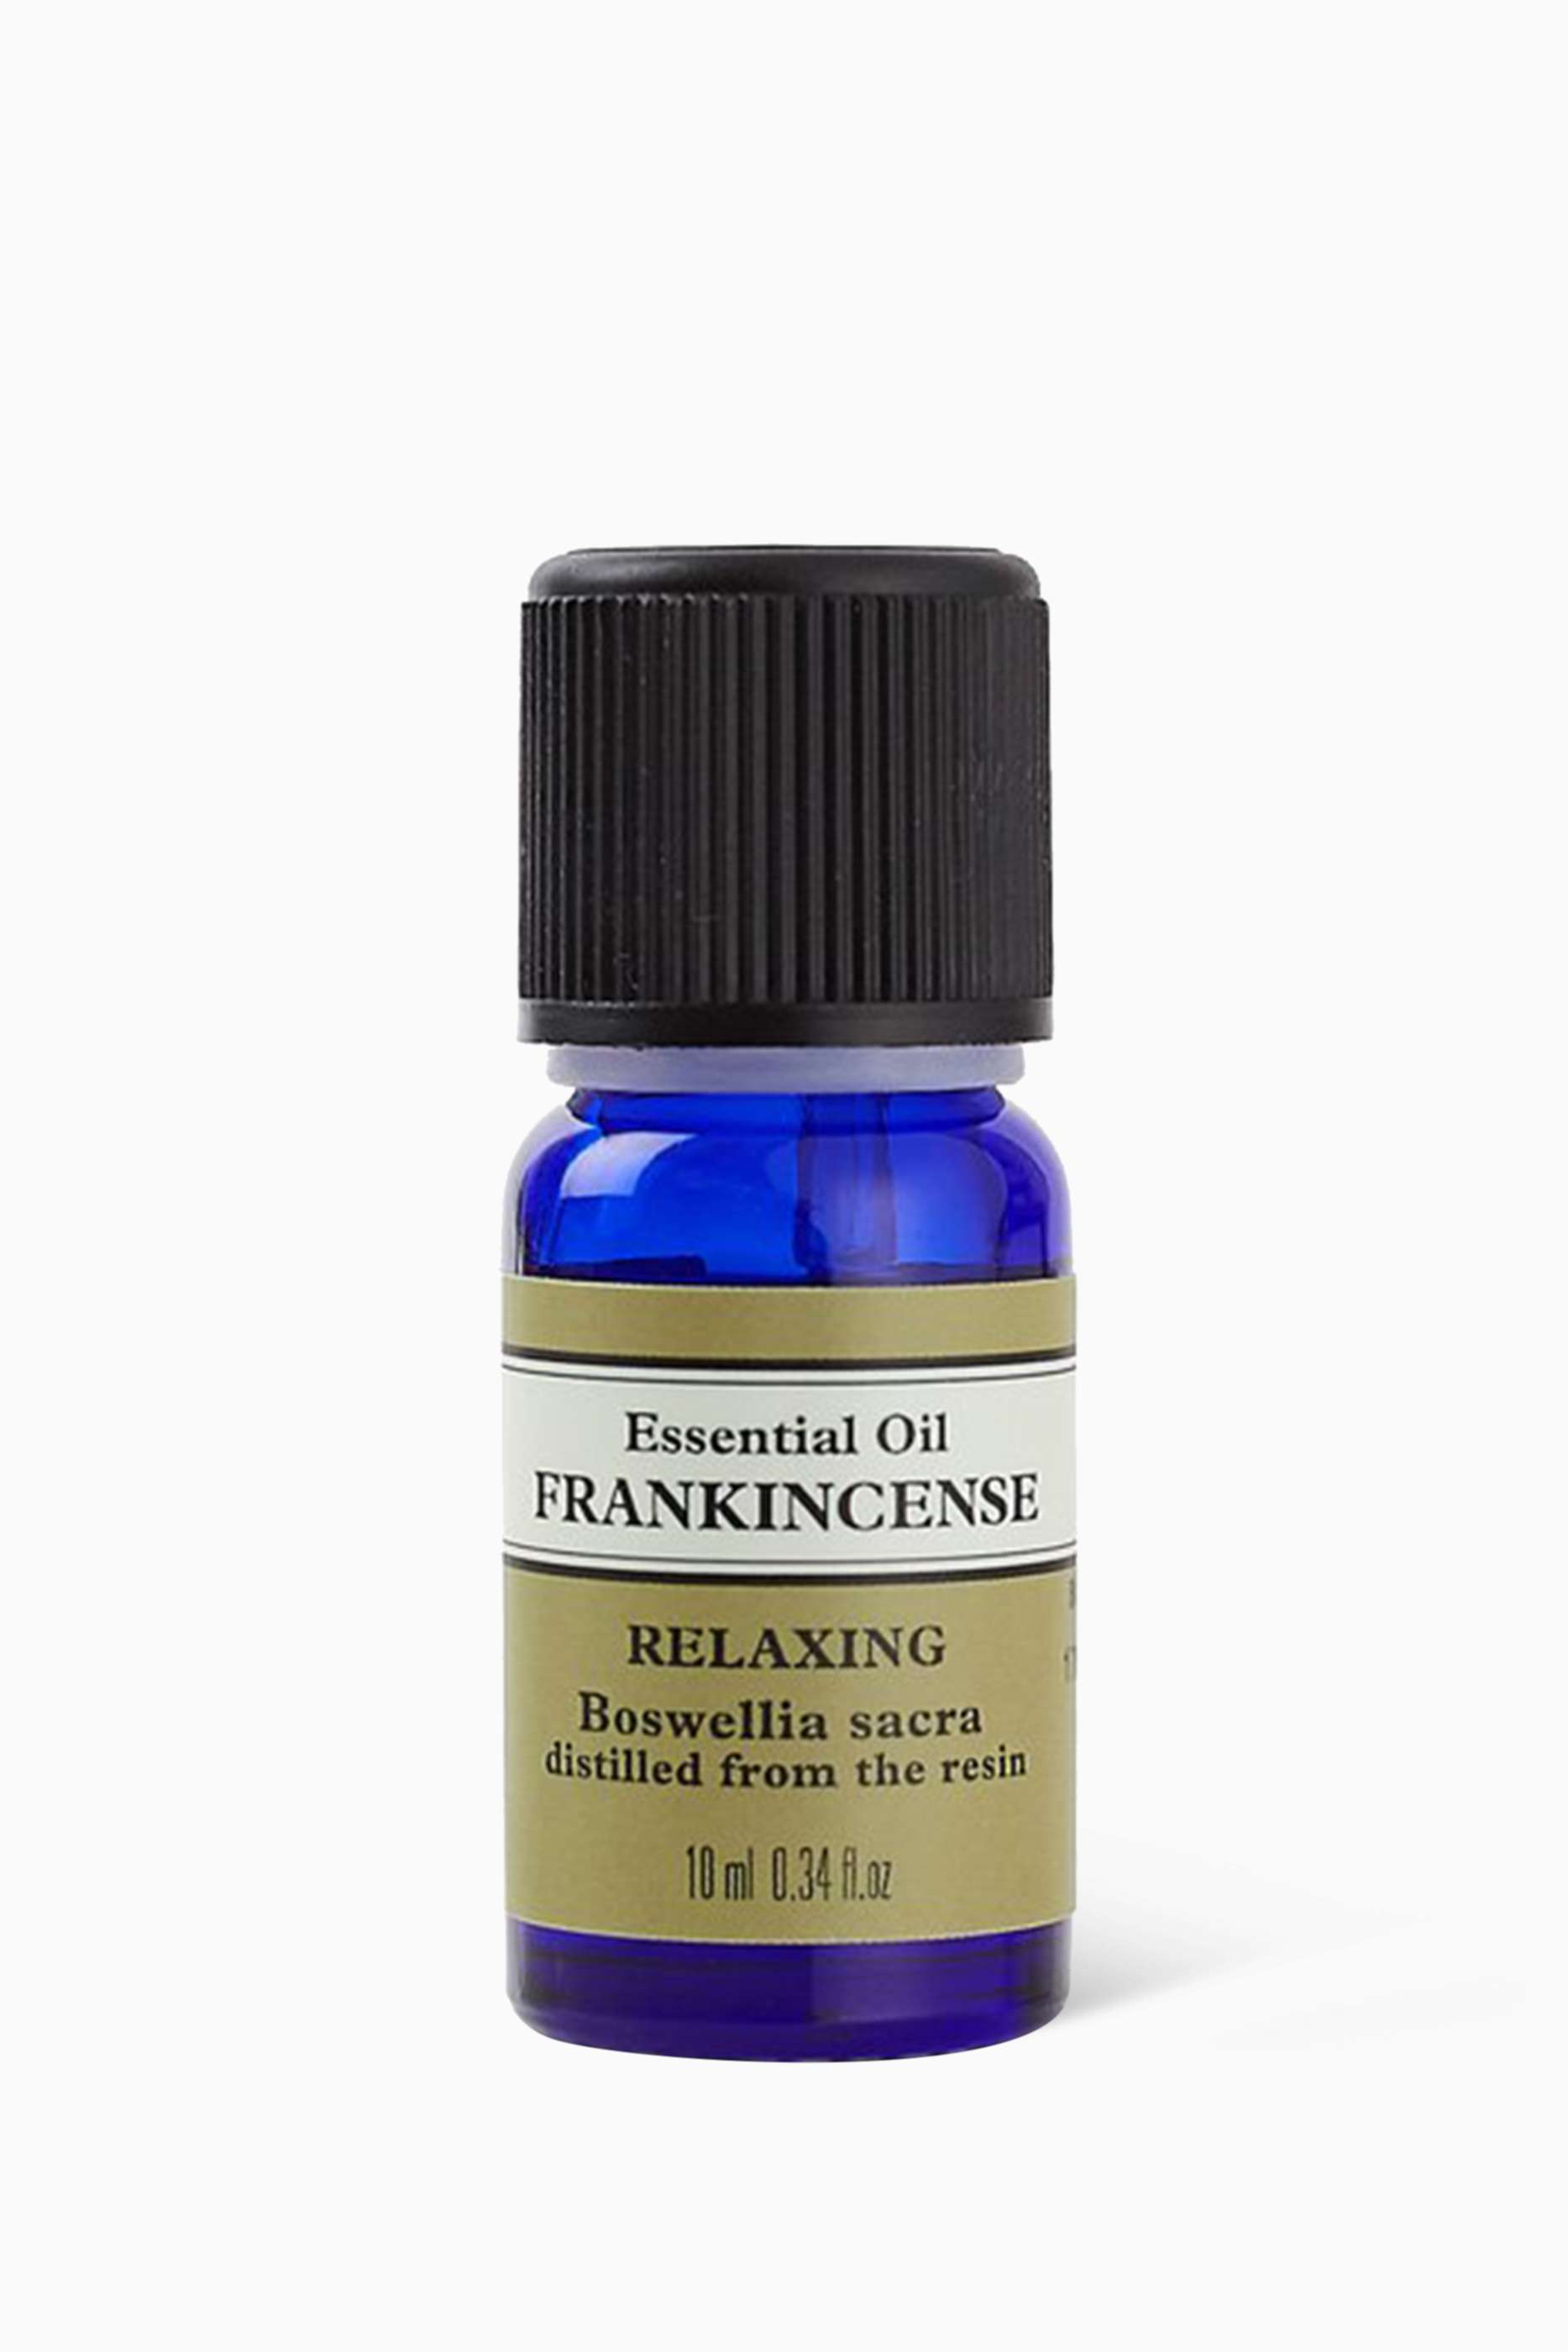 neal's yard frankincense perfume